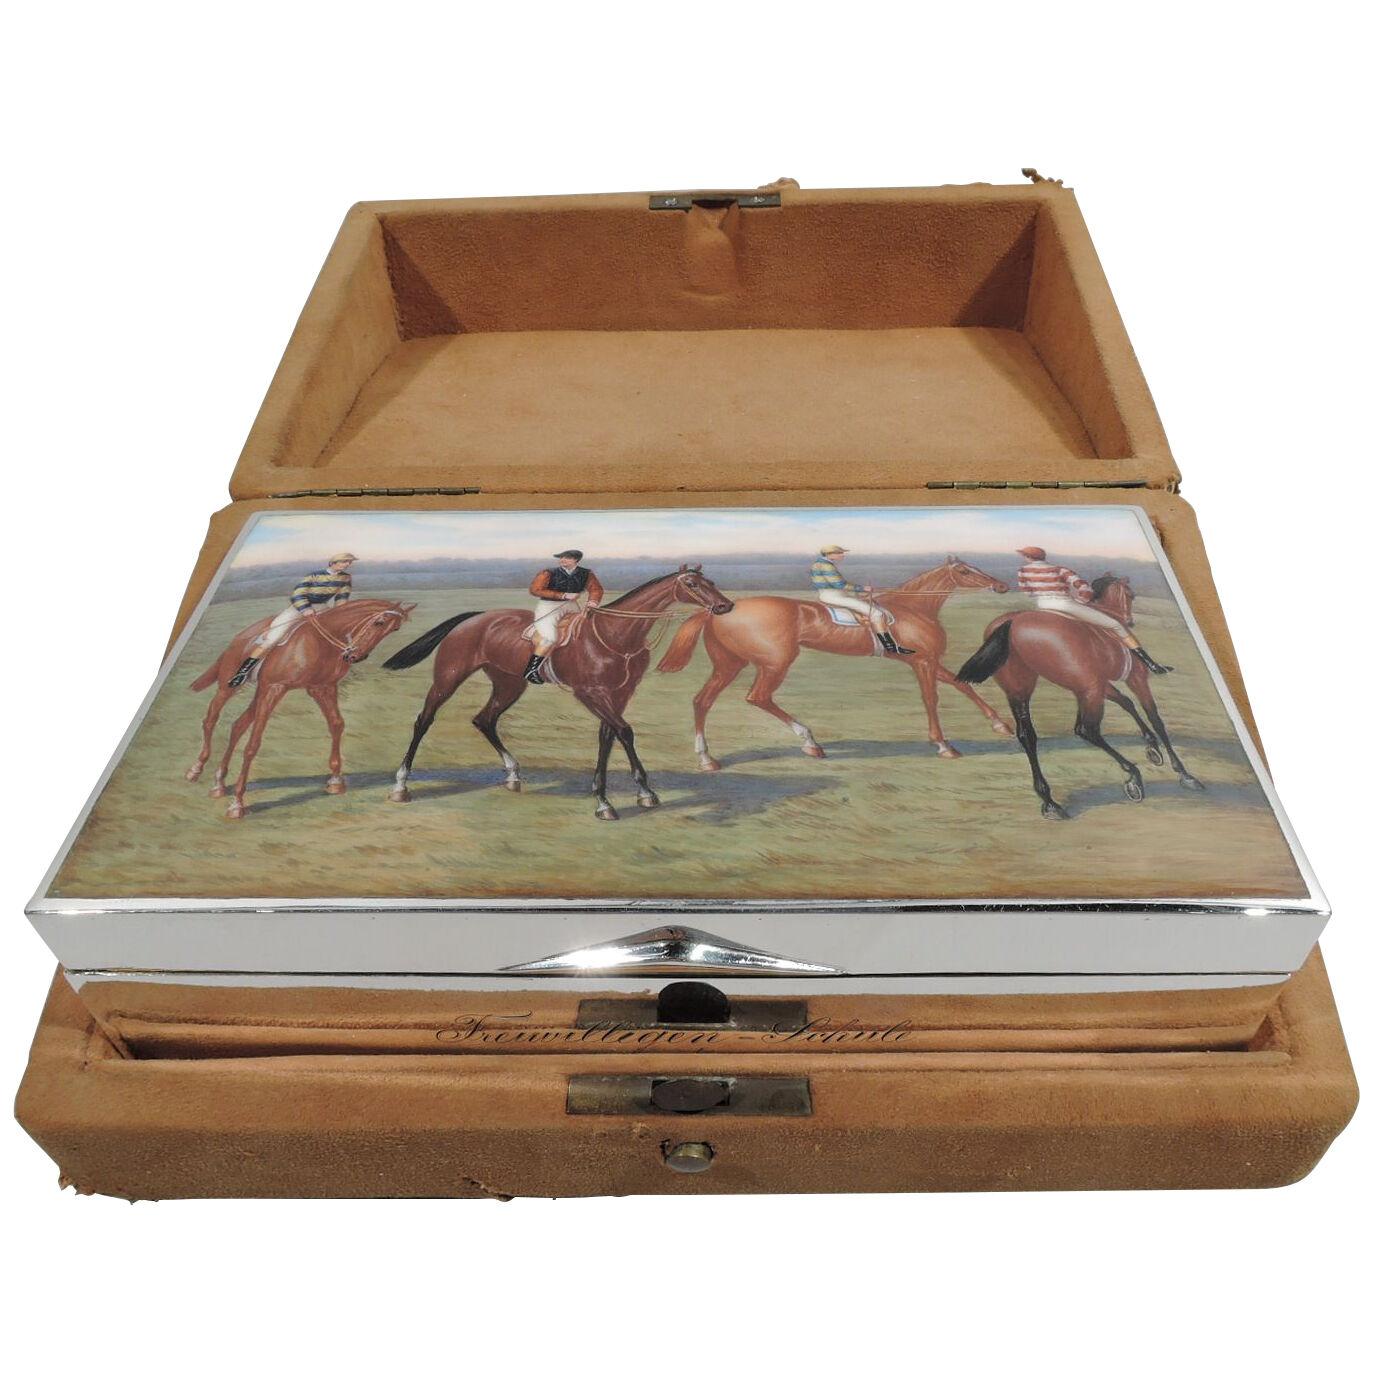 Antique Austrian Silver & Enamel Horse Jockey Box in Original Case